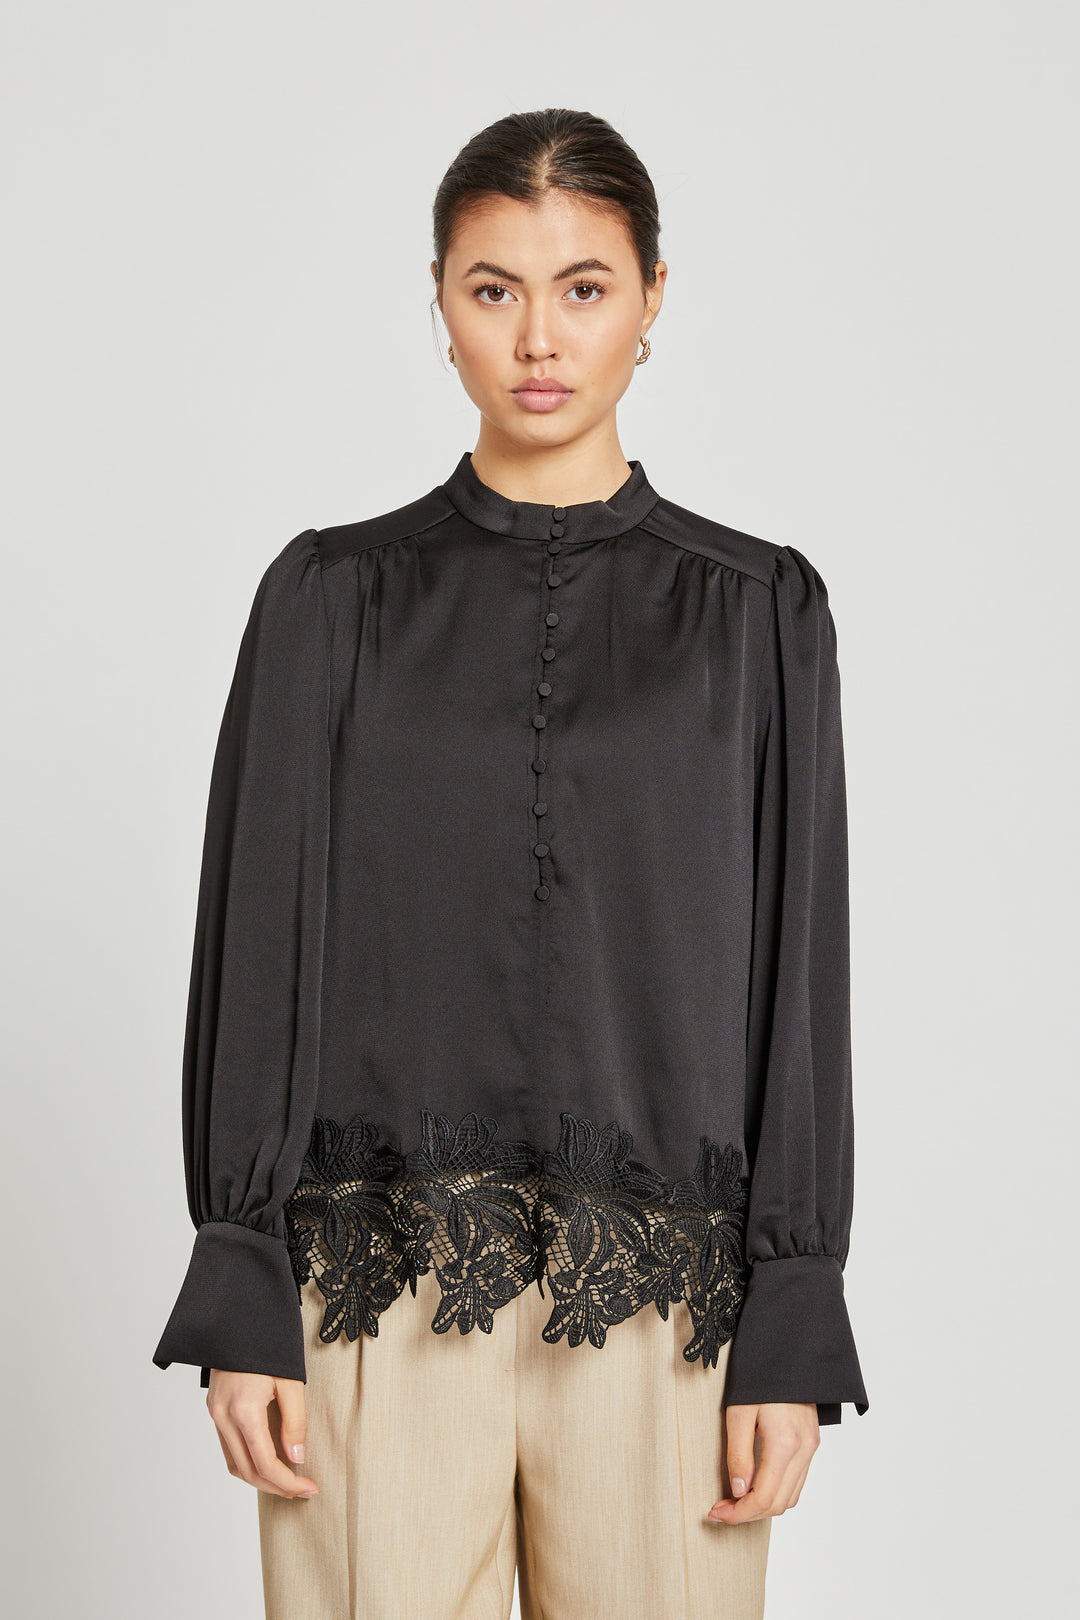 Bruuns Bazaar Women AcaciaBBKatara blouse blouse Black